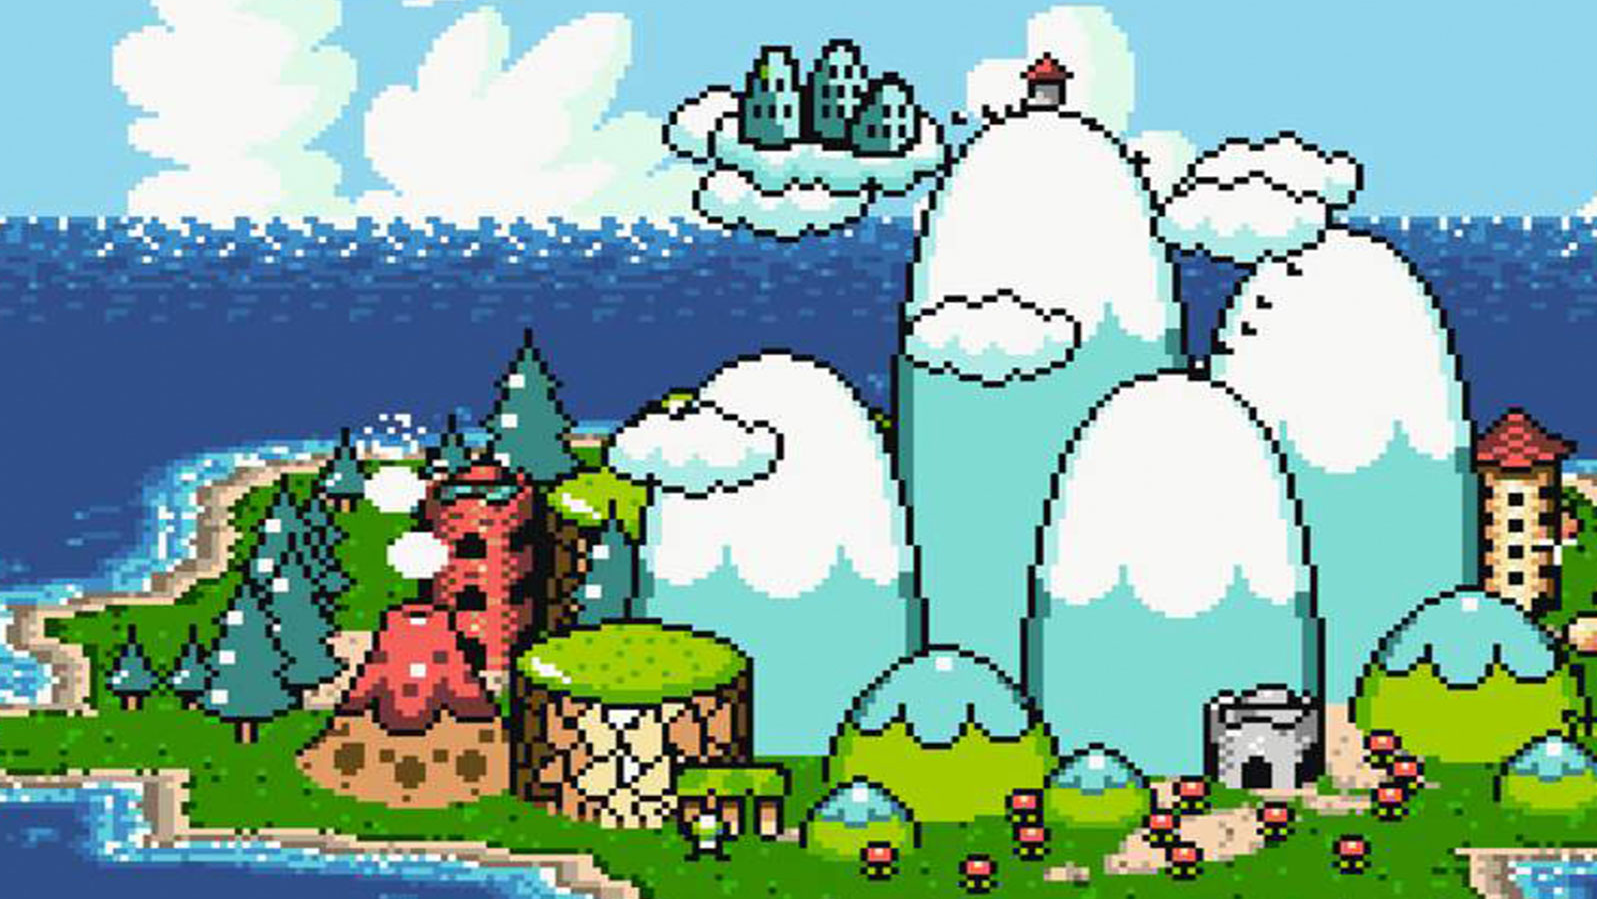 Mario yoshi island. Марио Йоши ворлд 2 остров. Марио Исланд. Super Mario World 2 - Yoshi's Island Snes. Super Mario Yoshi Island.